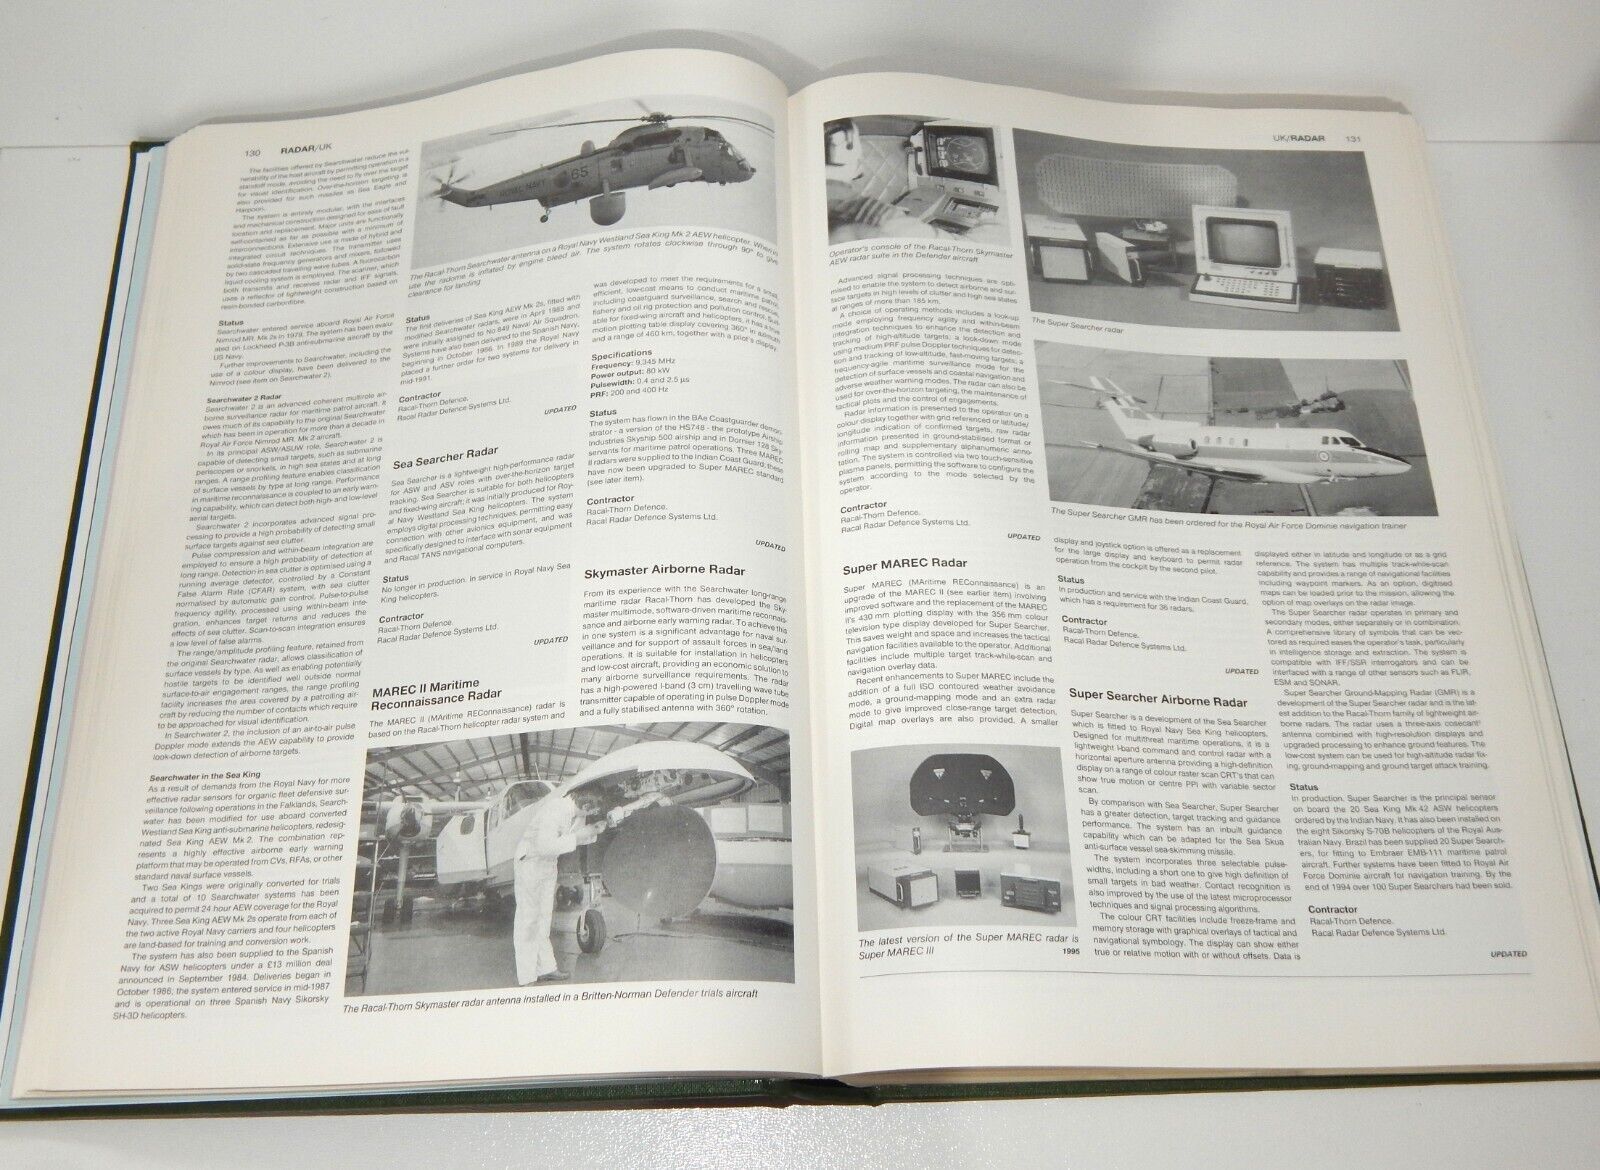 used Jane's Avionics 1996-97 - Military Book Aircraft Avionics Military Book Aircraft